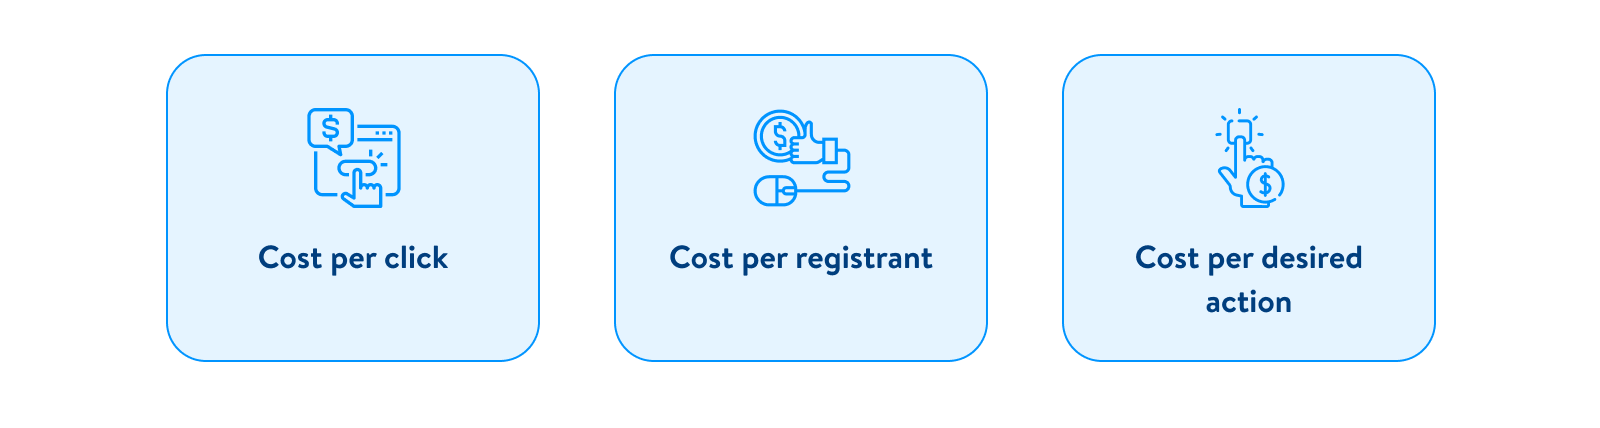 (1) Cost per click (2) Cost per registrant (3) Cost per desired action